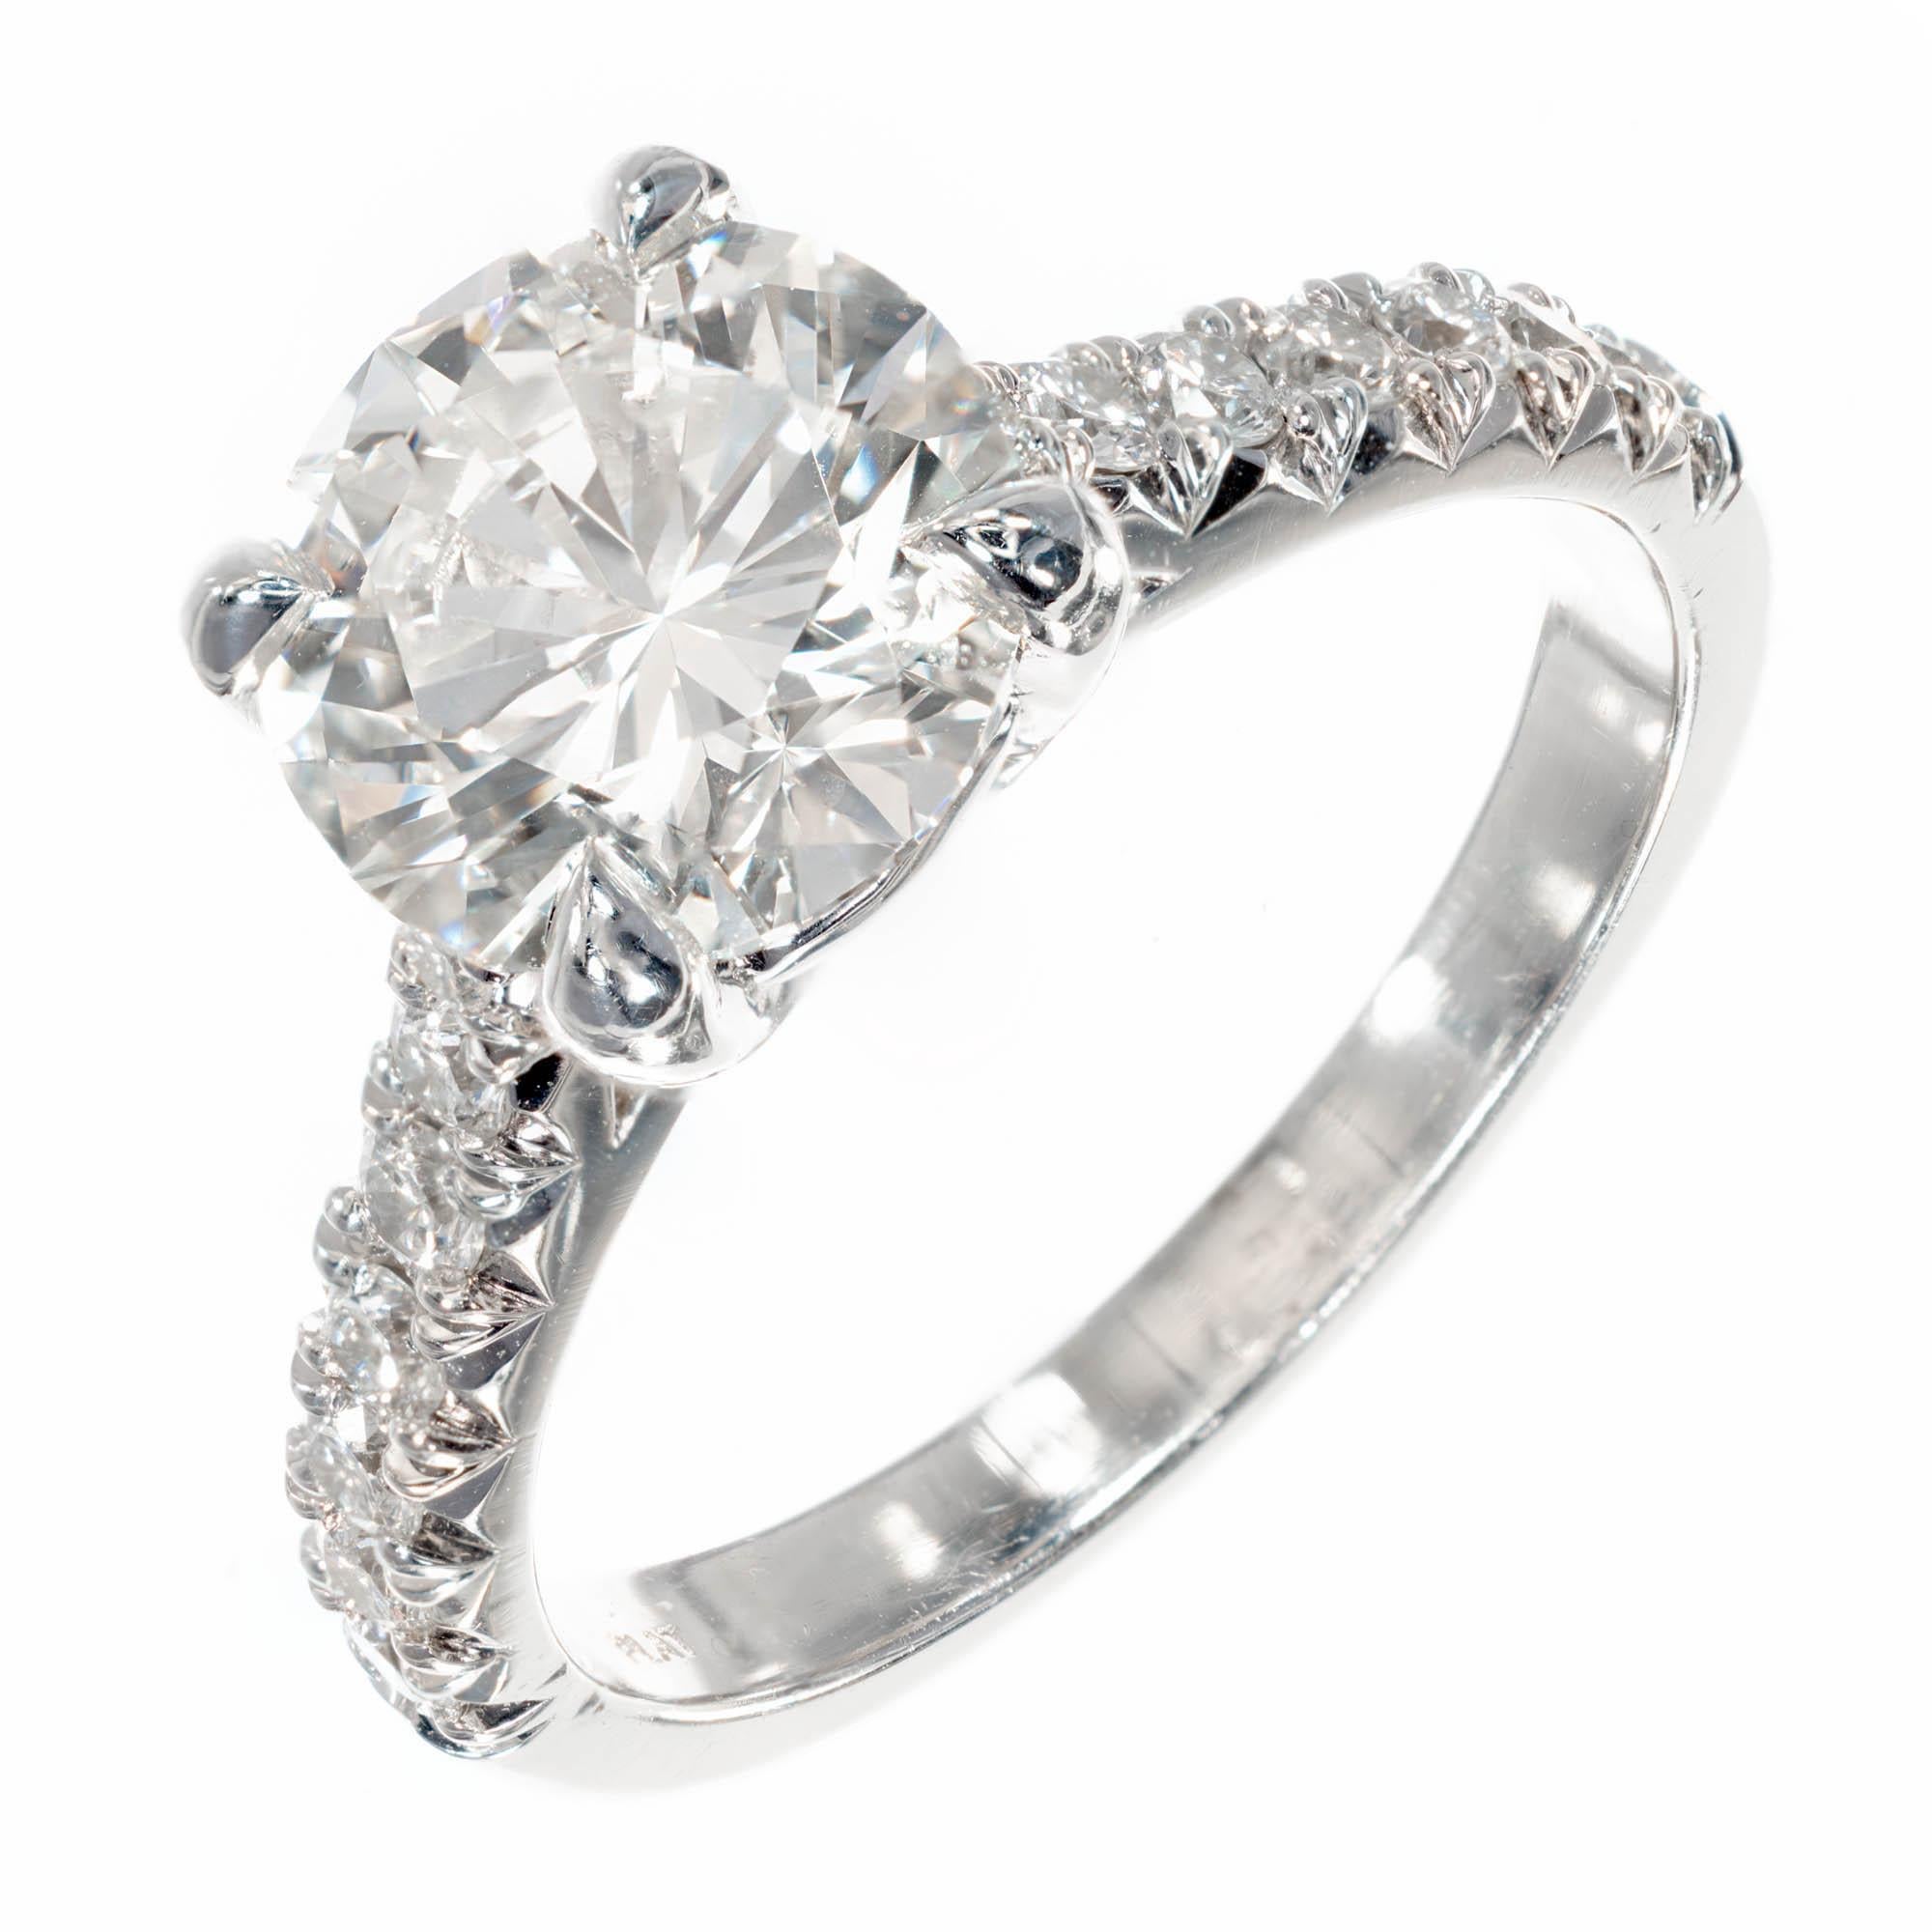 Peter Suchy GIA Certified 2.08 Carat Round Diamond Platinum Engagement Ring